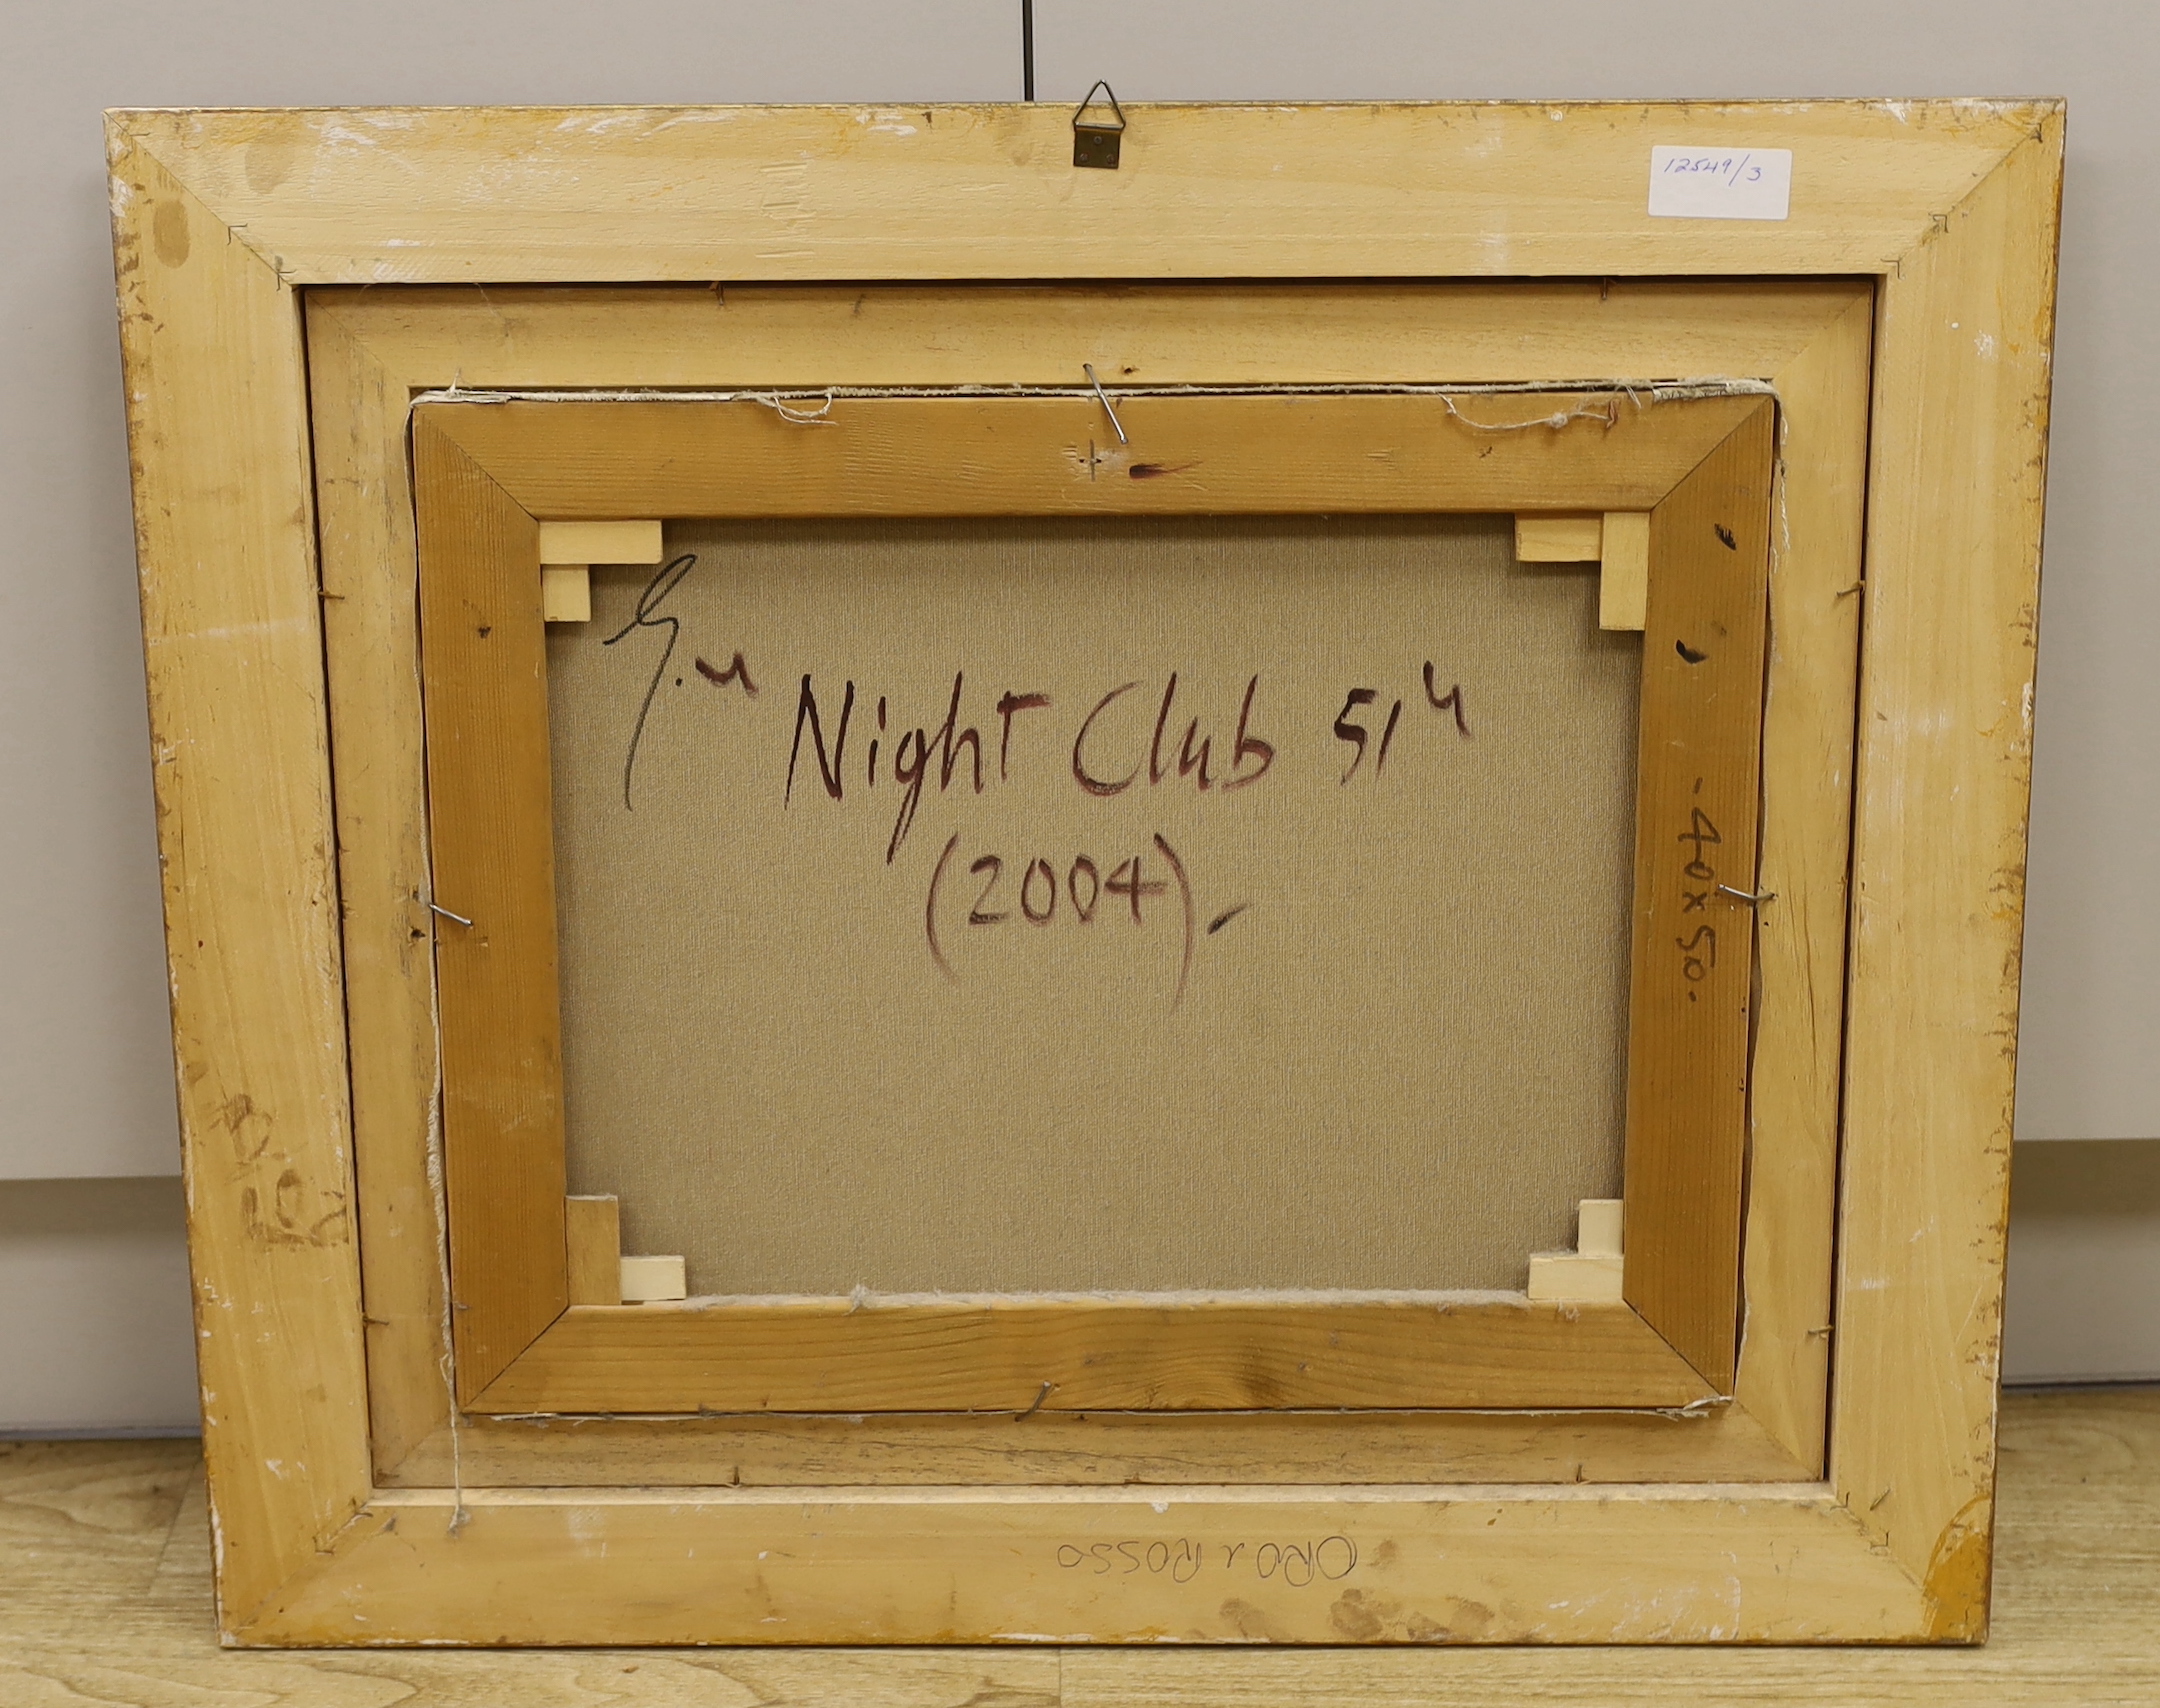 Gino Giuni?, oil on canvas, 'The Nightclub', 2004 39x49cm